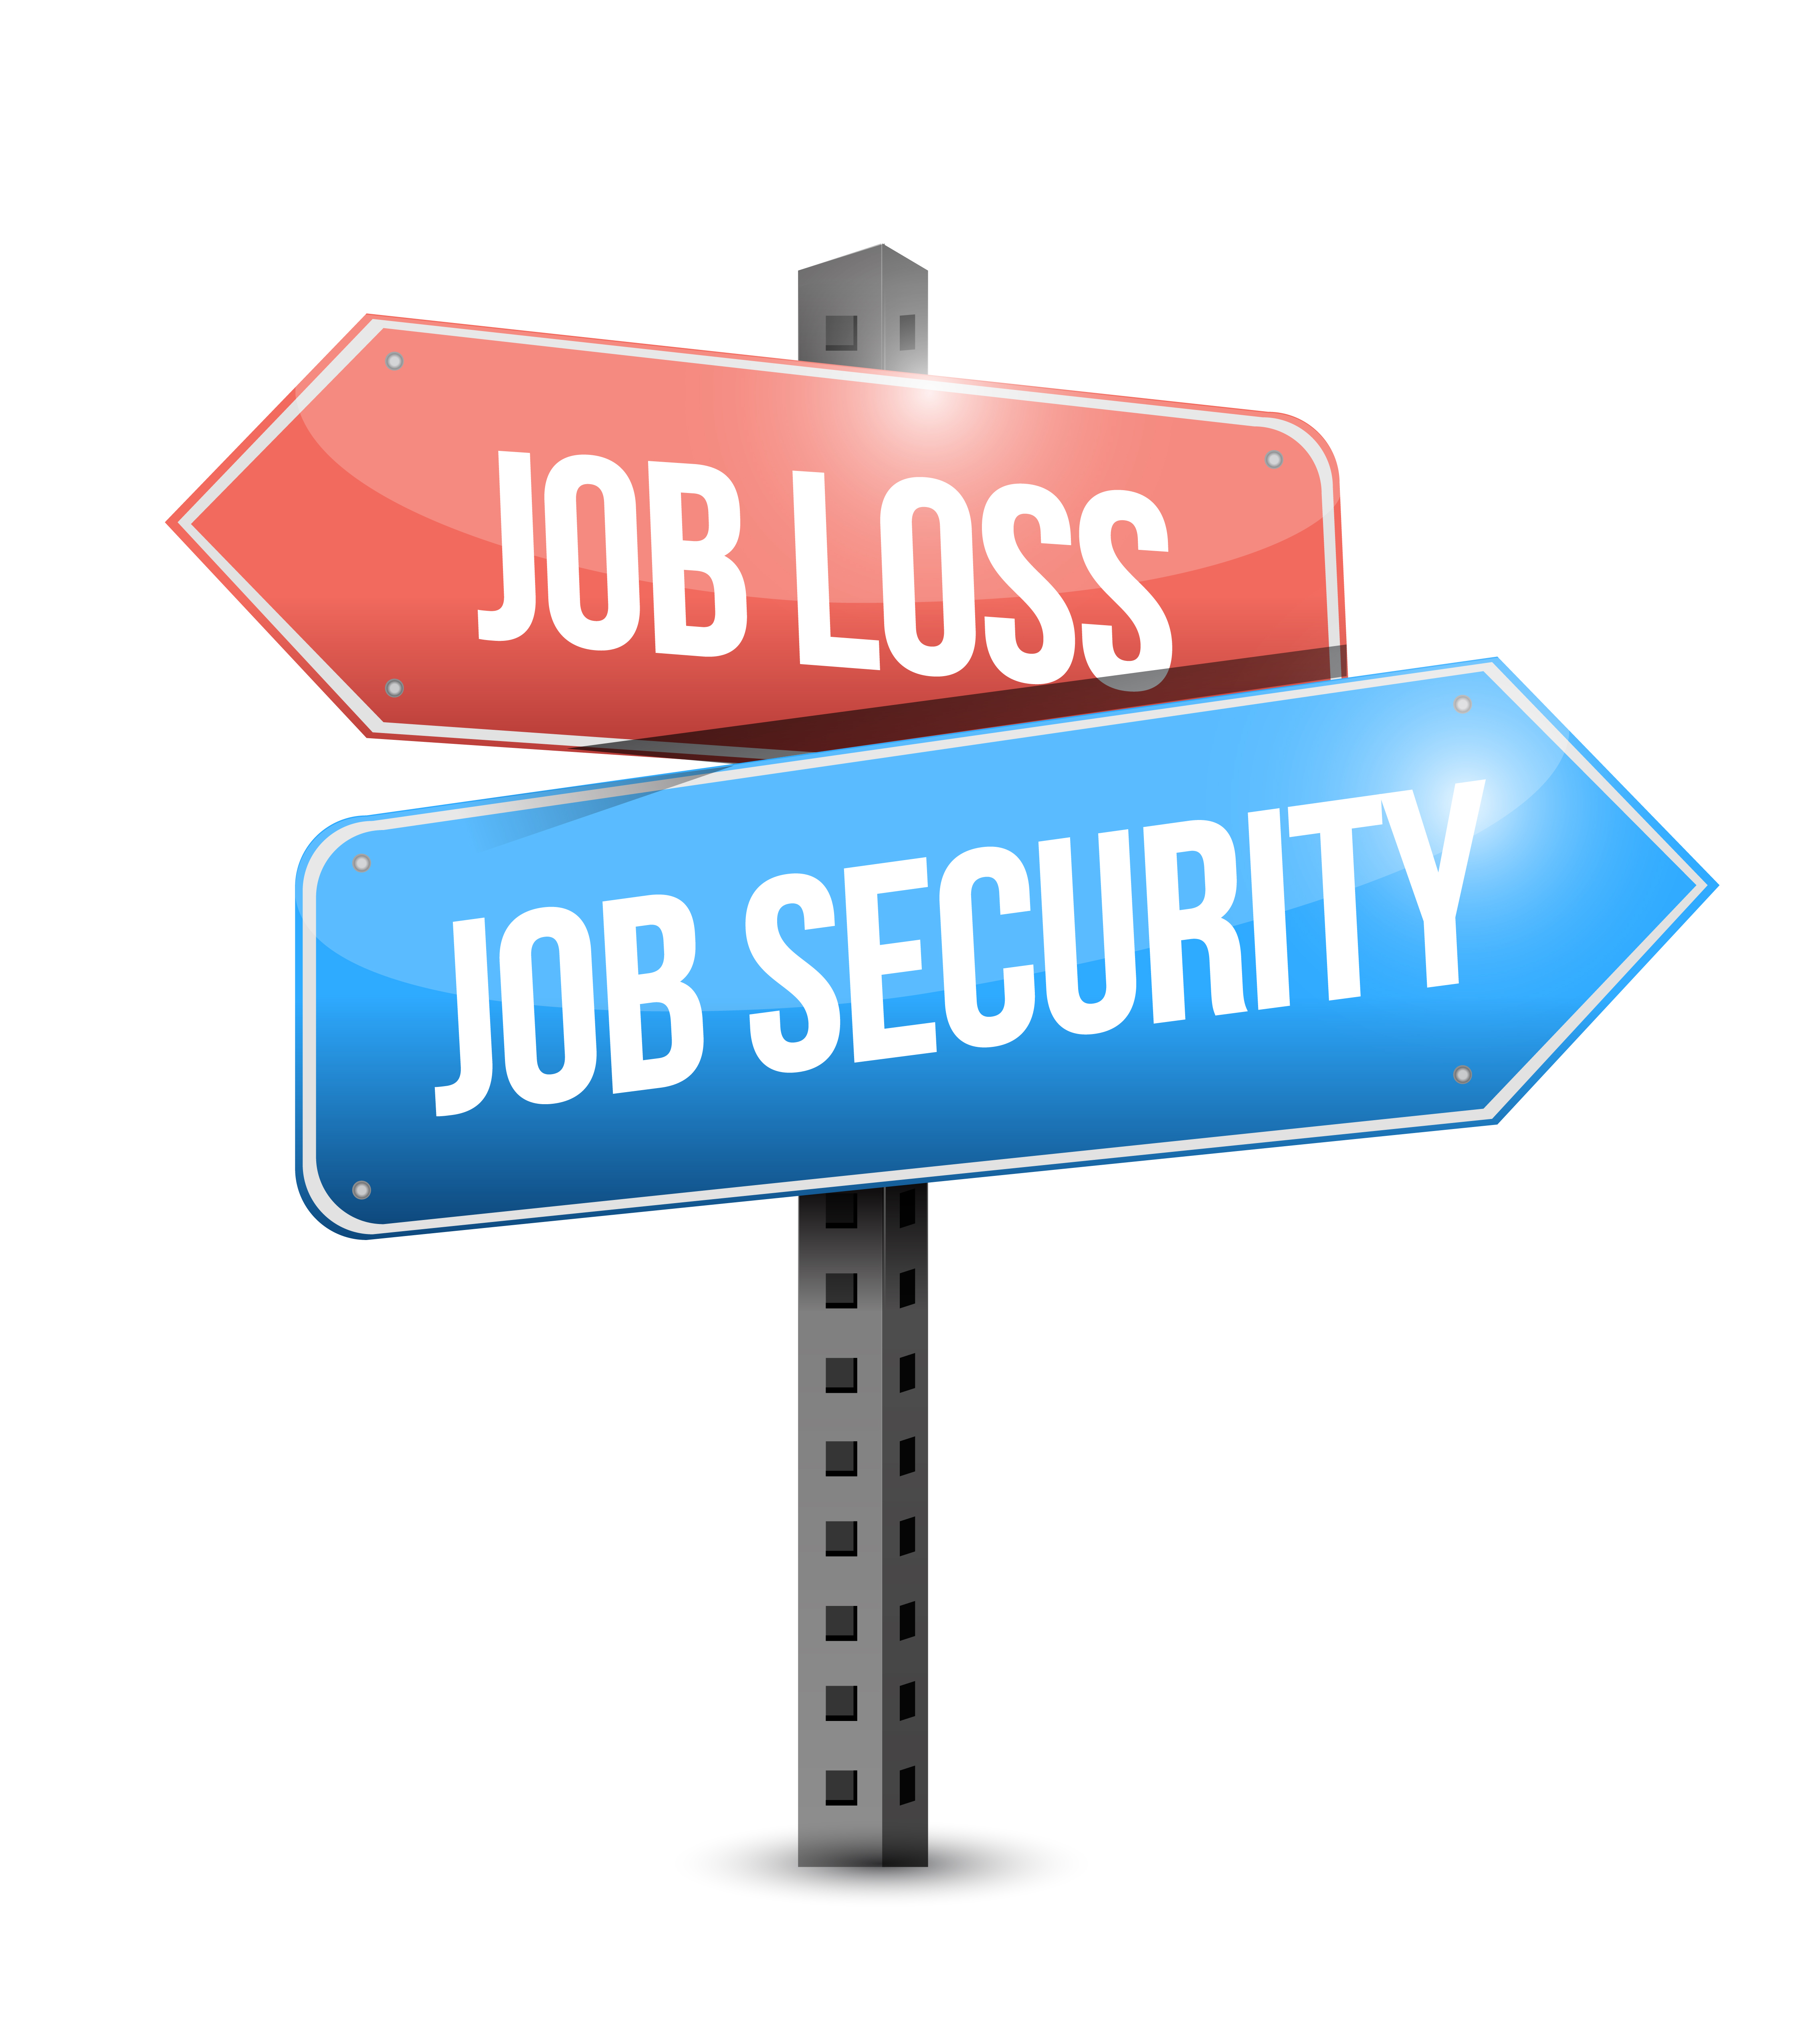 Job Loss Job Security Stock Photo Image